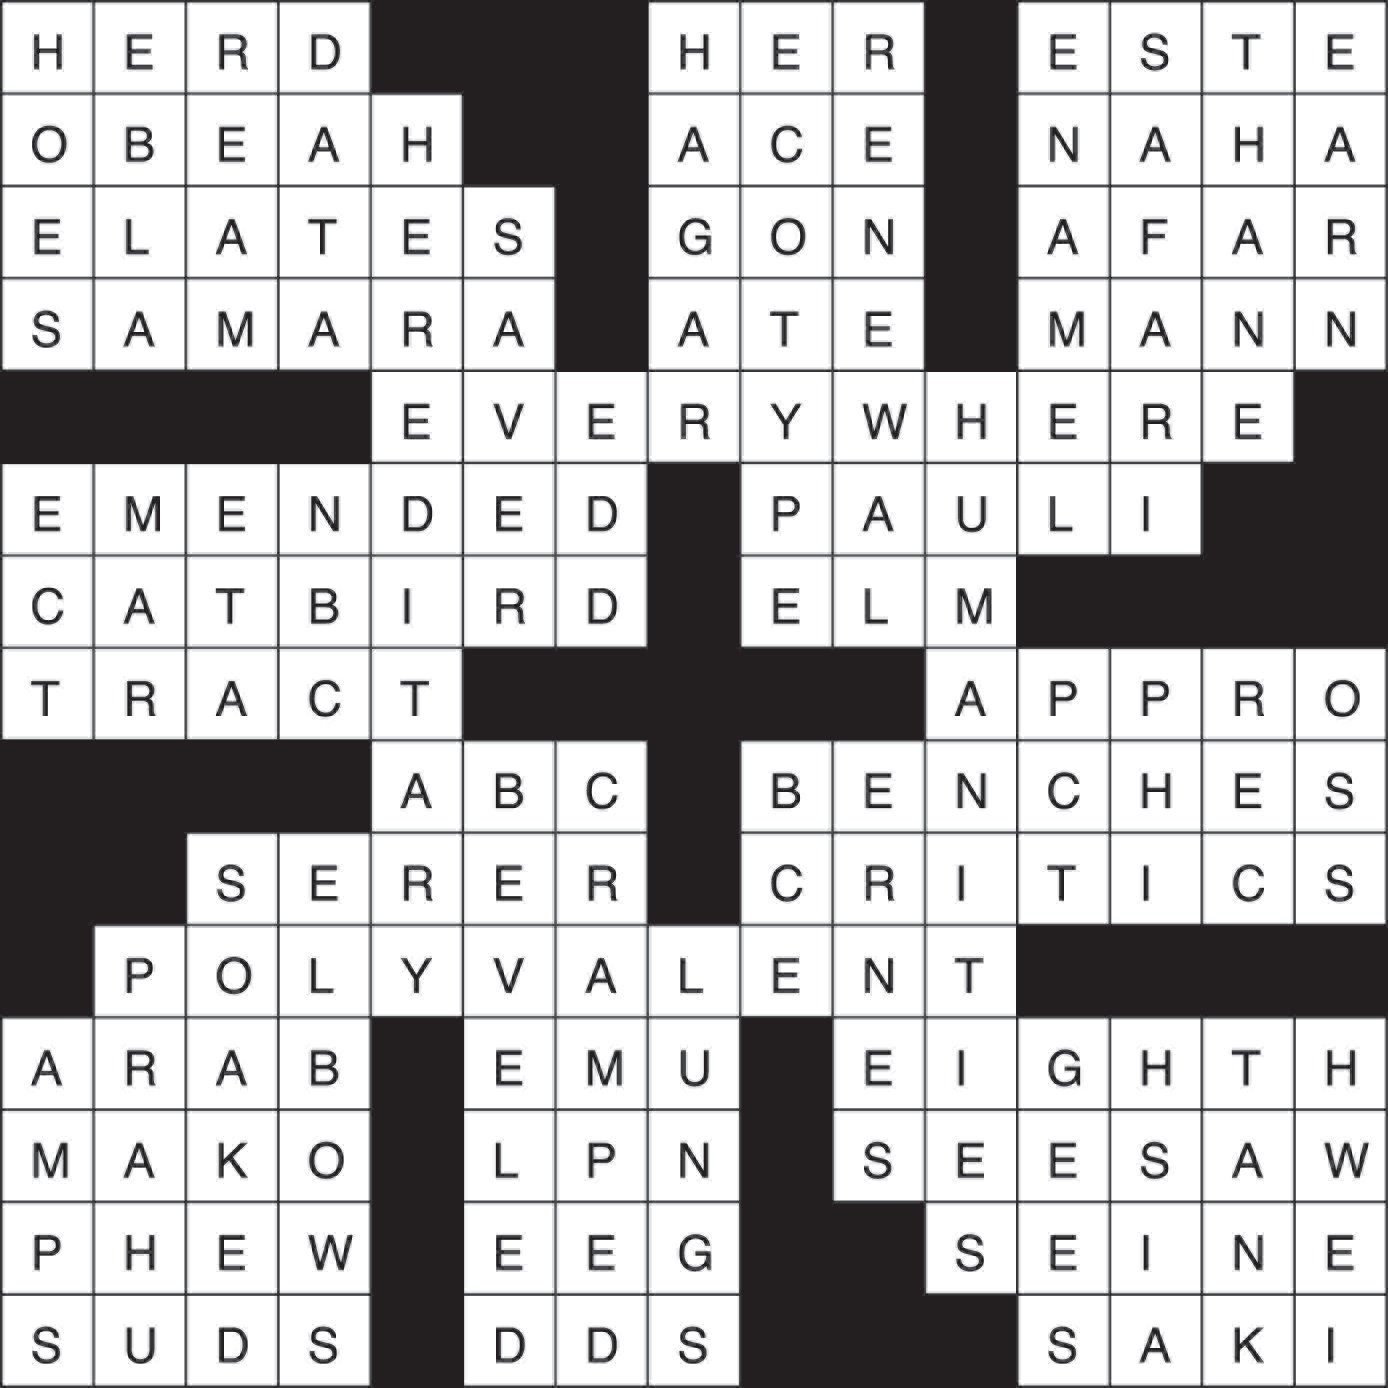 arduous journey 6 letters crossword